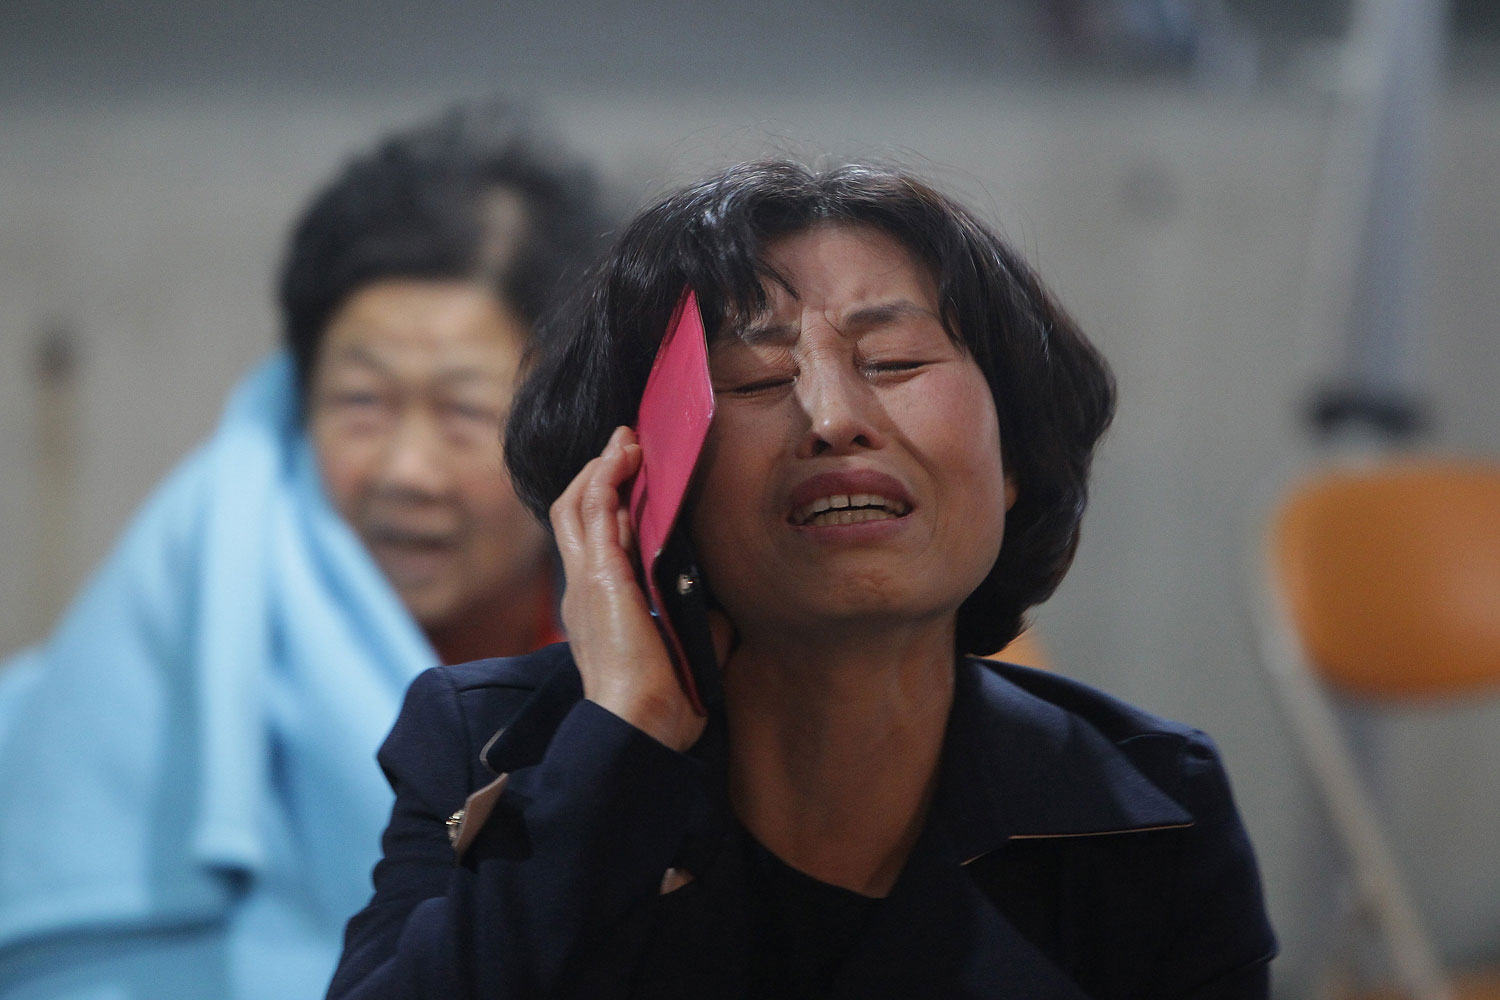 A Woman cries at Jindo port on April 16, 2014 in Jindo-gun, South Korea.